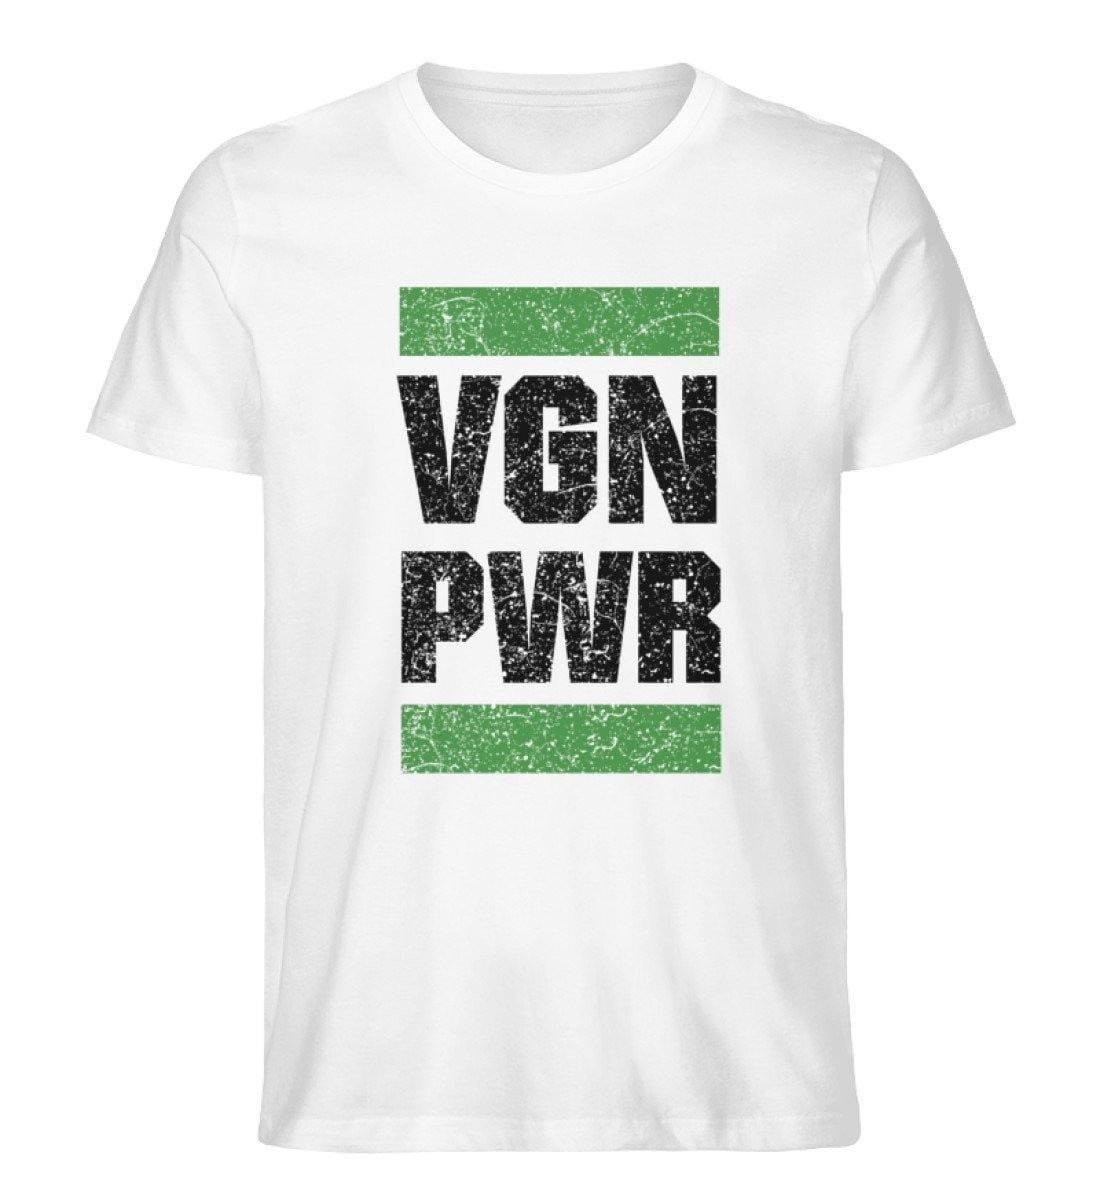 VGN PWR - Unisex Organic Shirt - Team Vegan © vegan t shirt